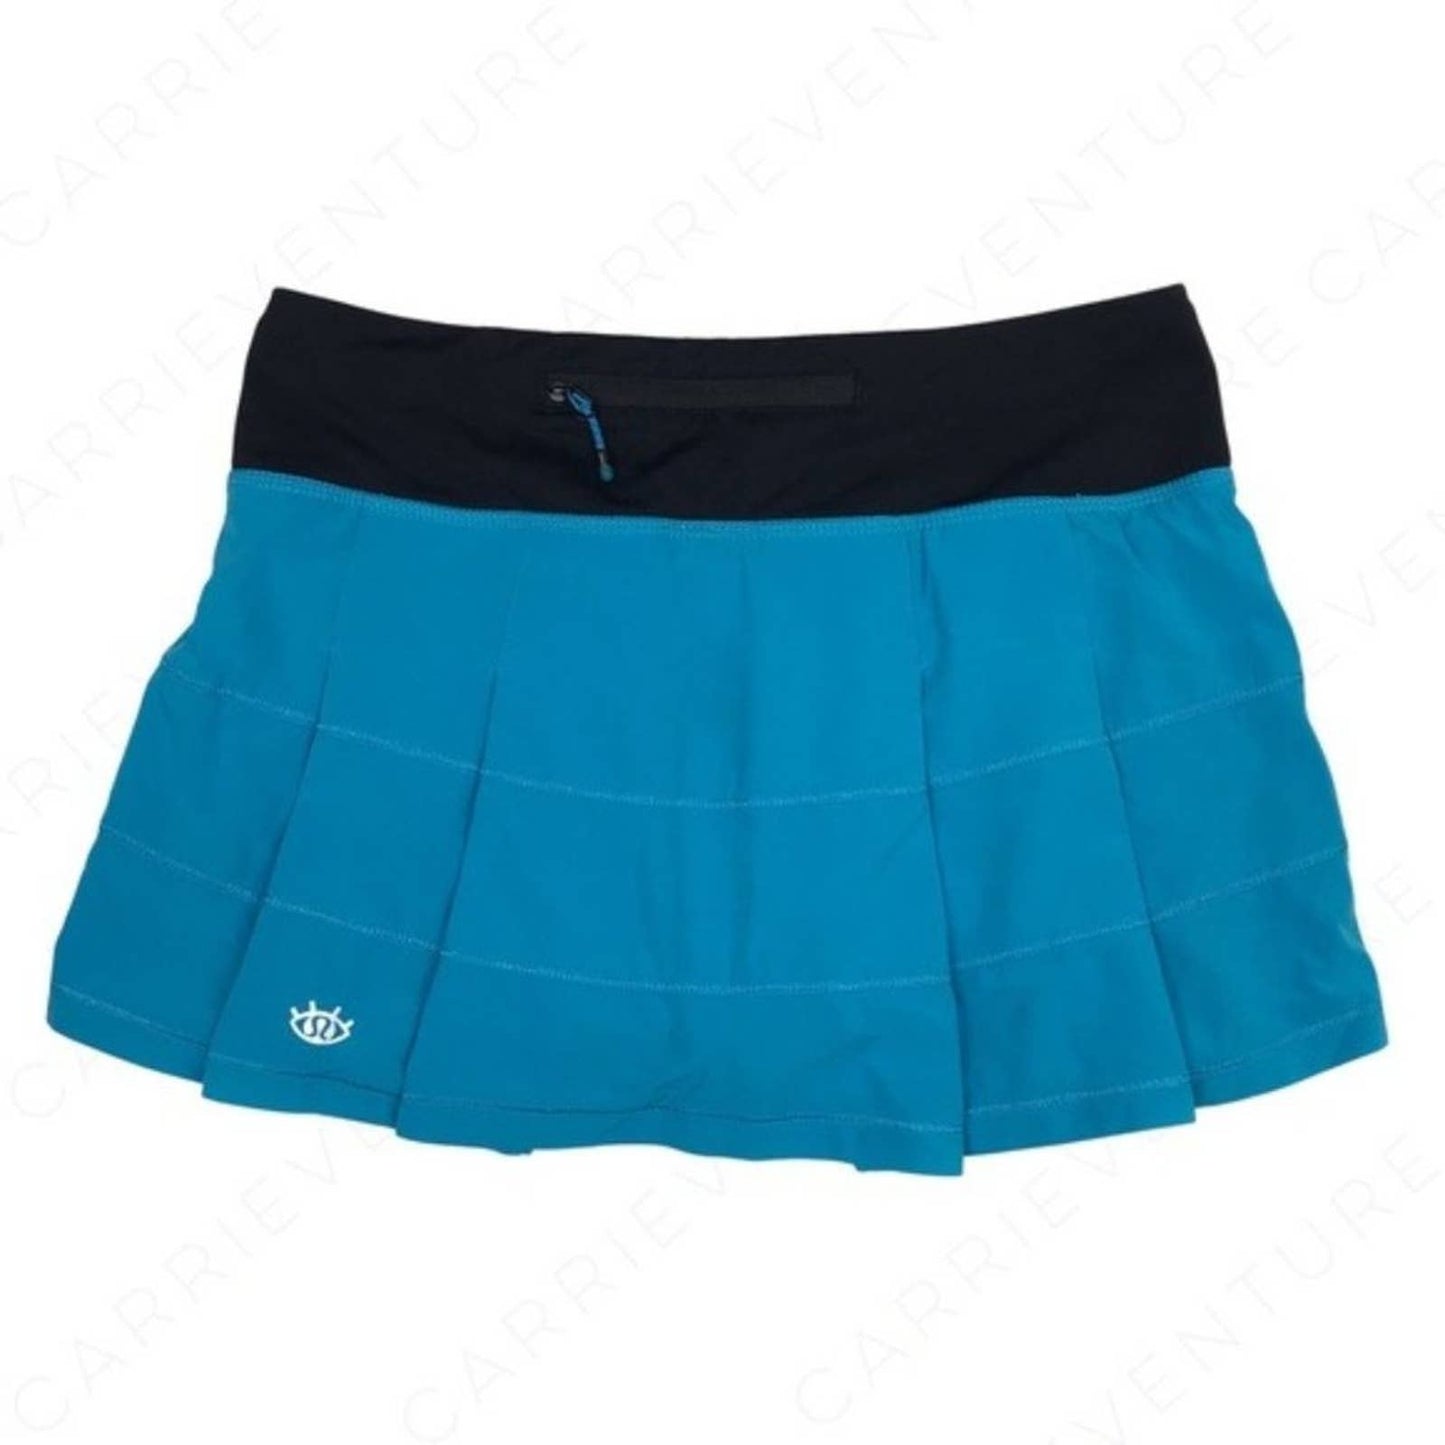 Lululemon Pace Rival 2014 Seawheeze Gusto Blue Tennis Running Skirt Skort Golf Size 4